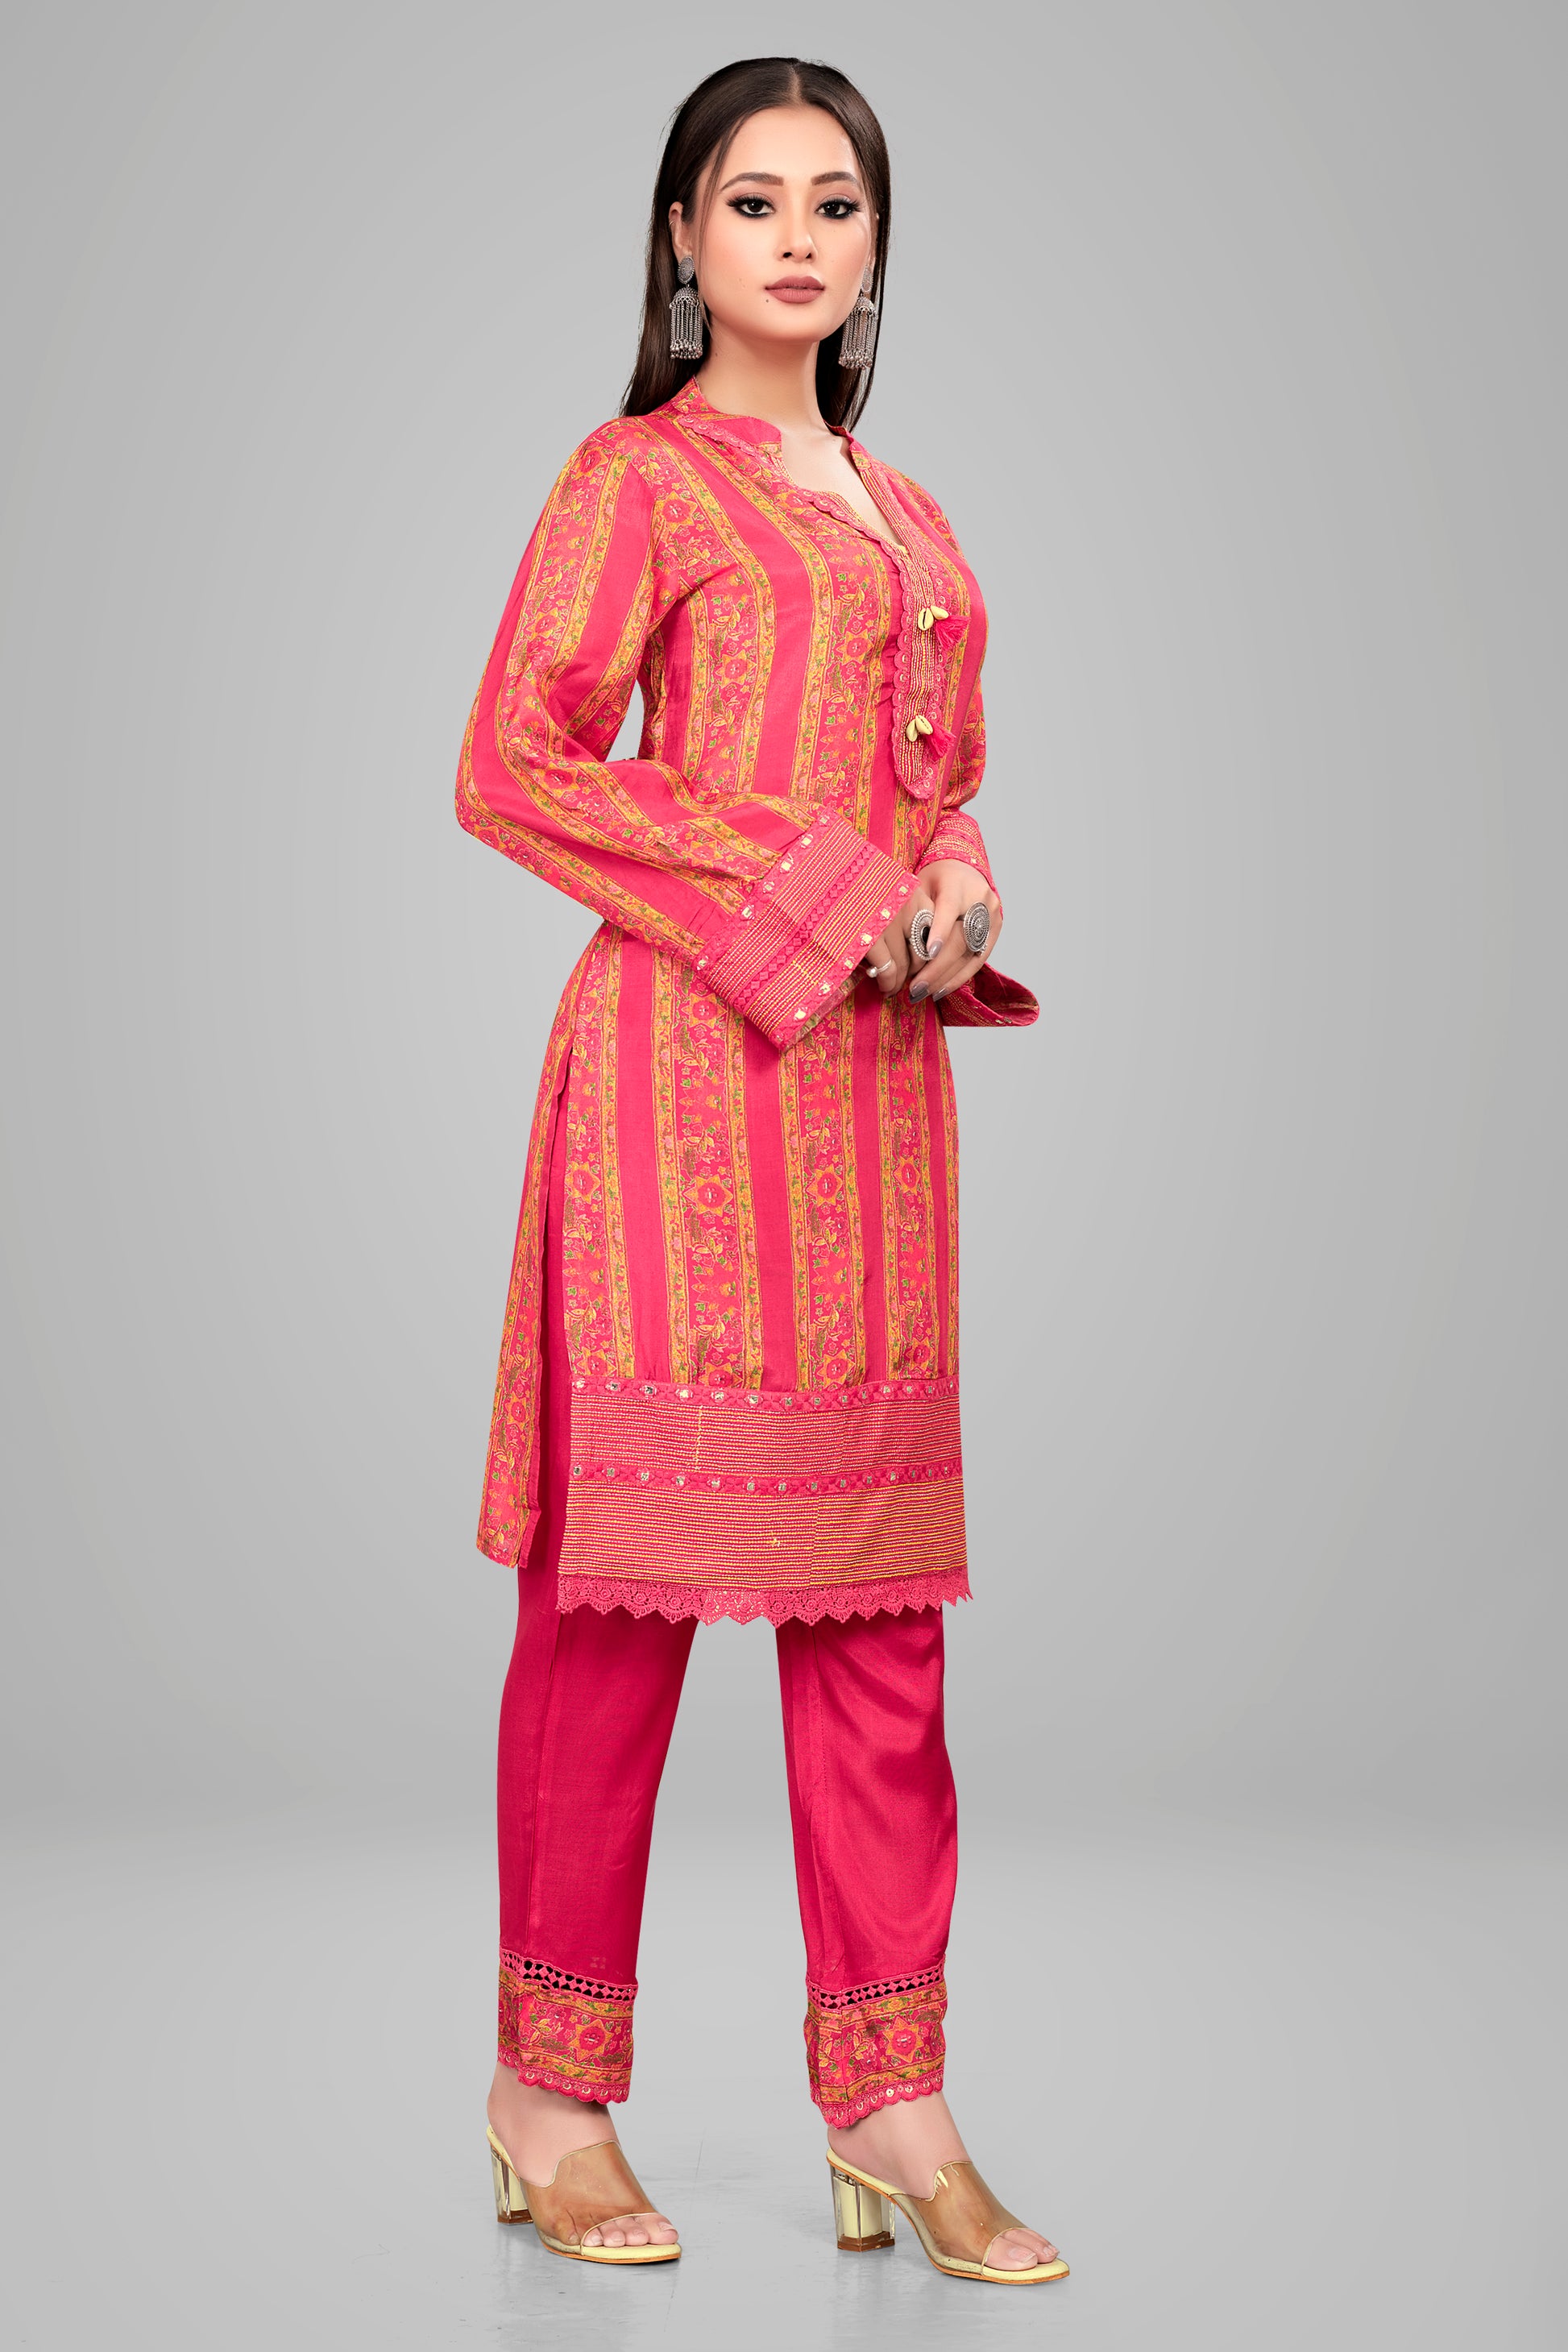 Ekisha's Designer Pink Muslin Kurta and Pant Set, side view